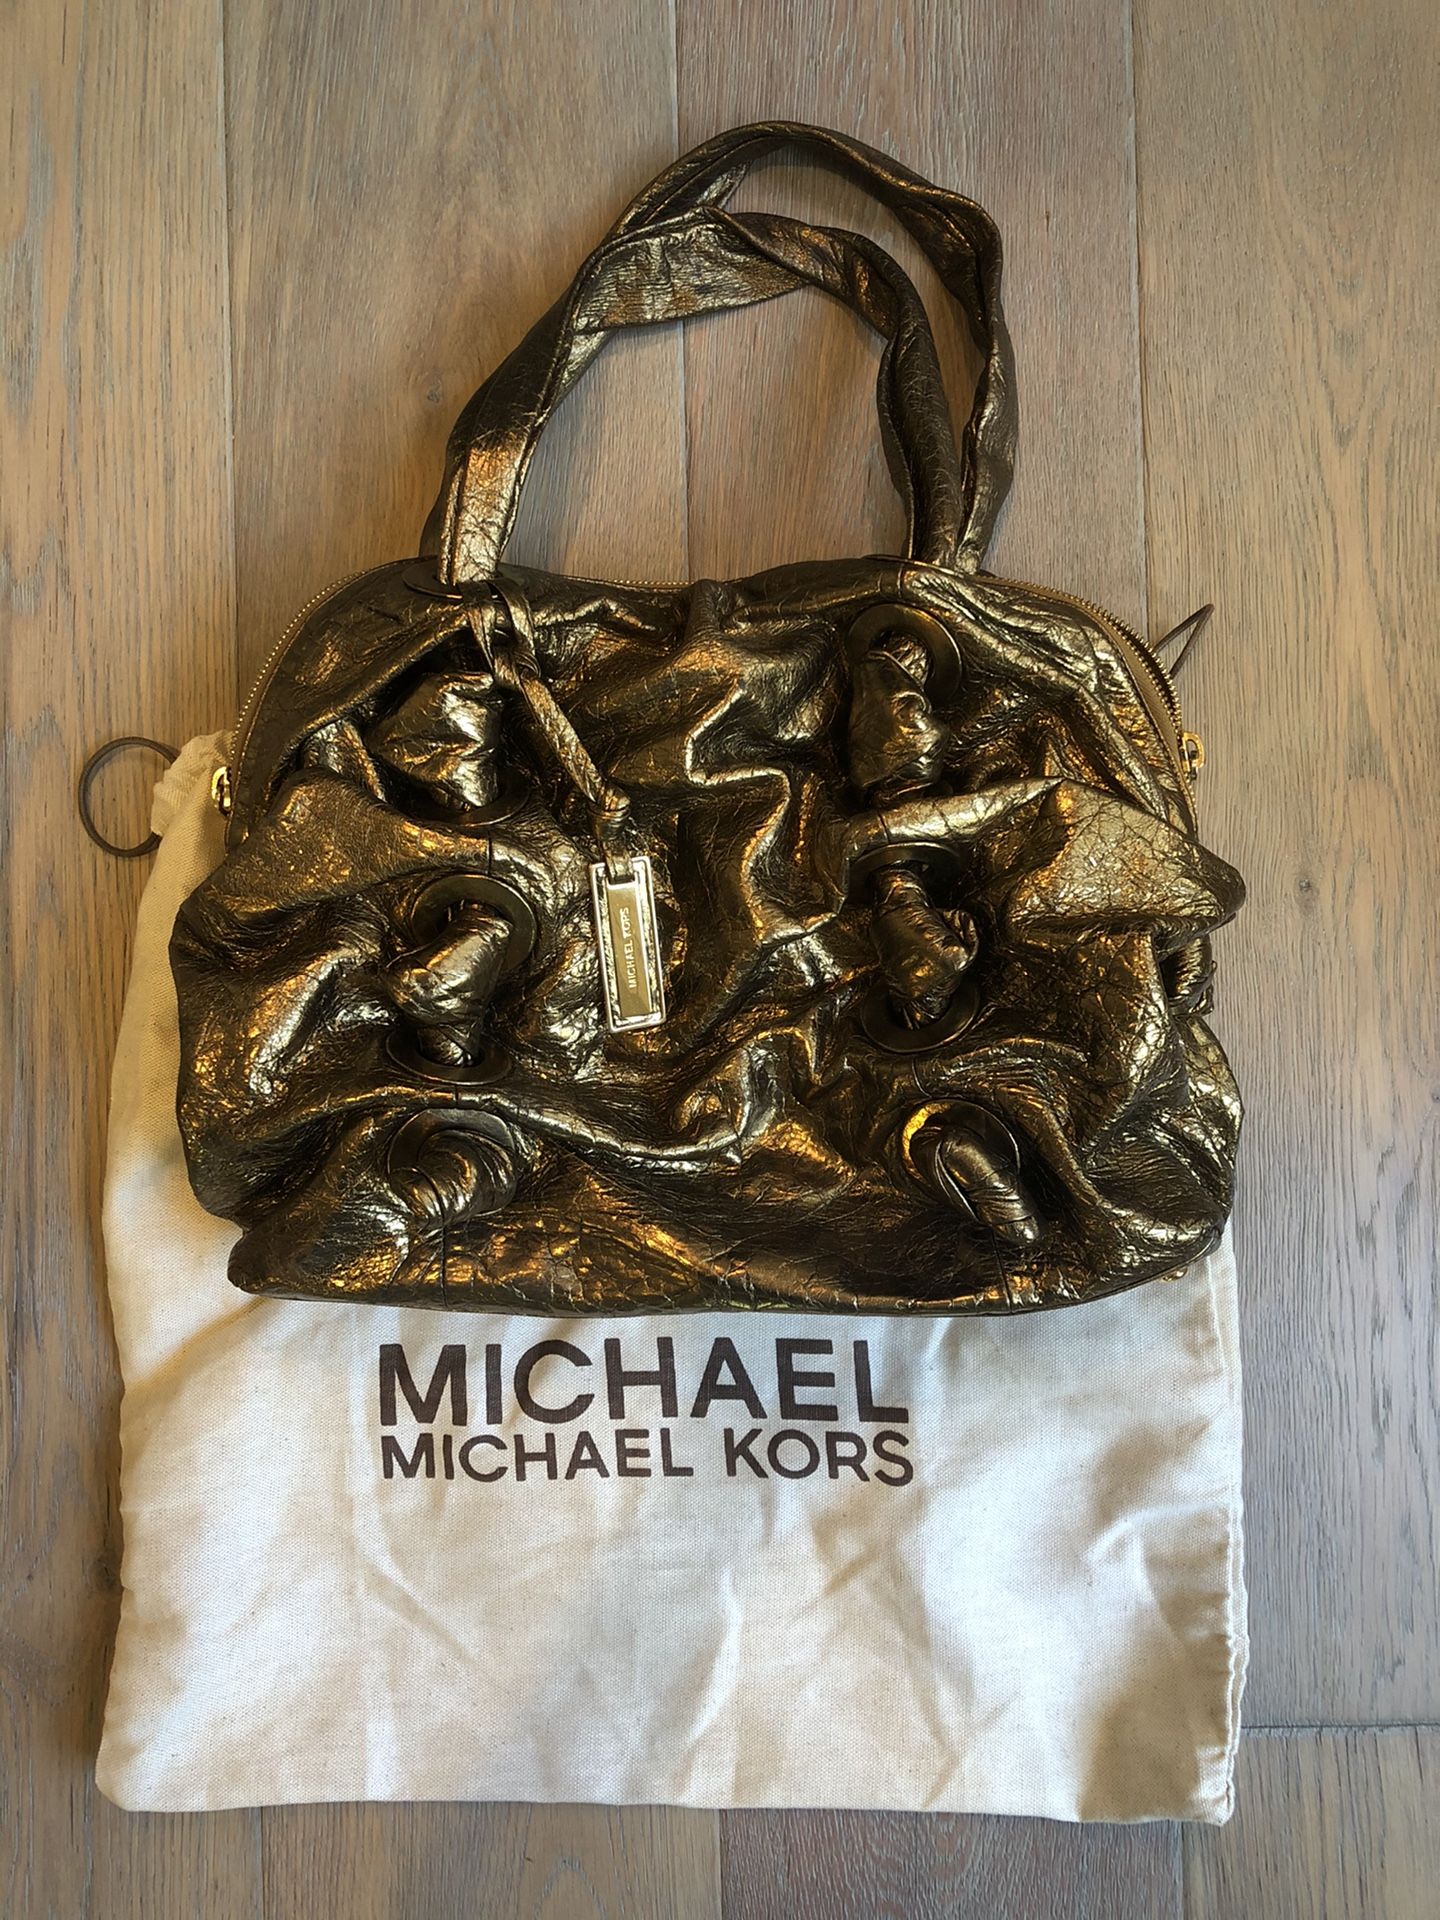 Michael Kors Limited Edition gold Leather handbag